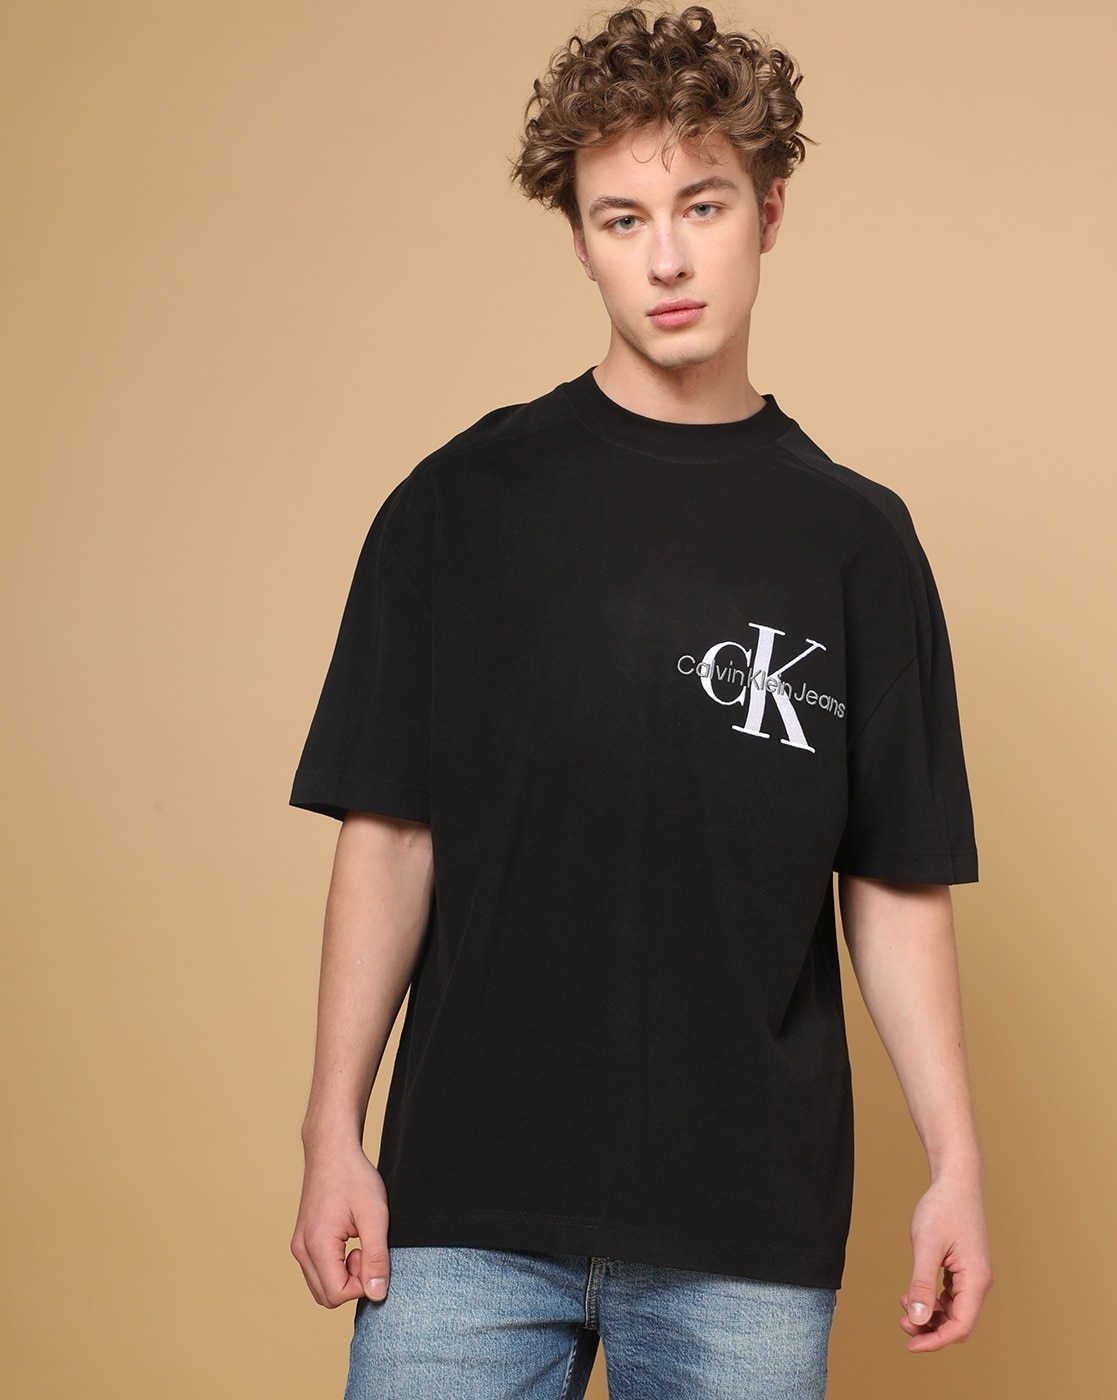 Buy Black Tshirts for Jeans Online by Klein Calvin Men